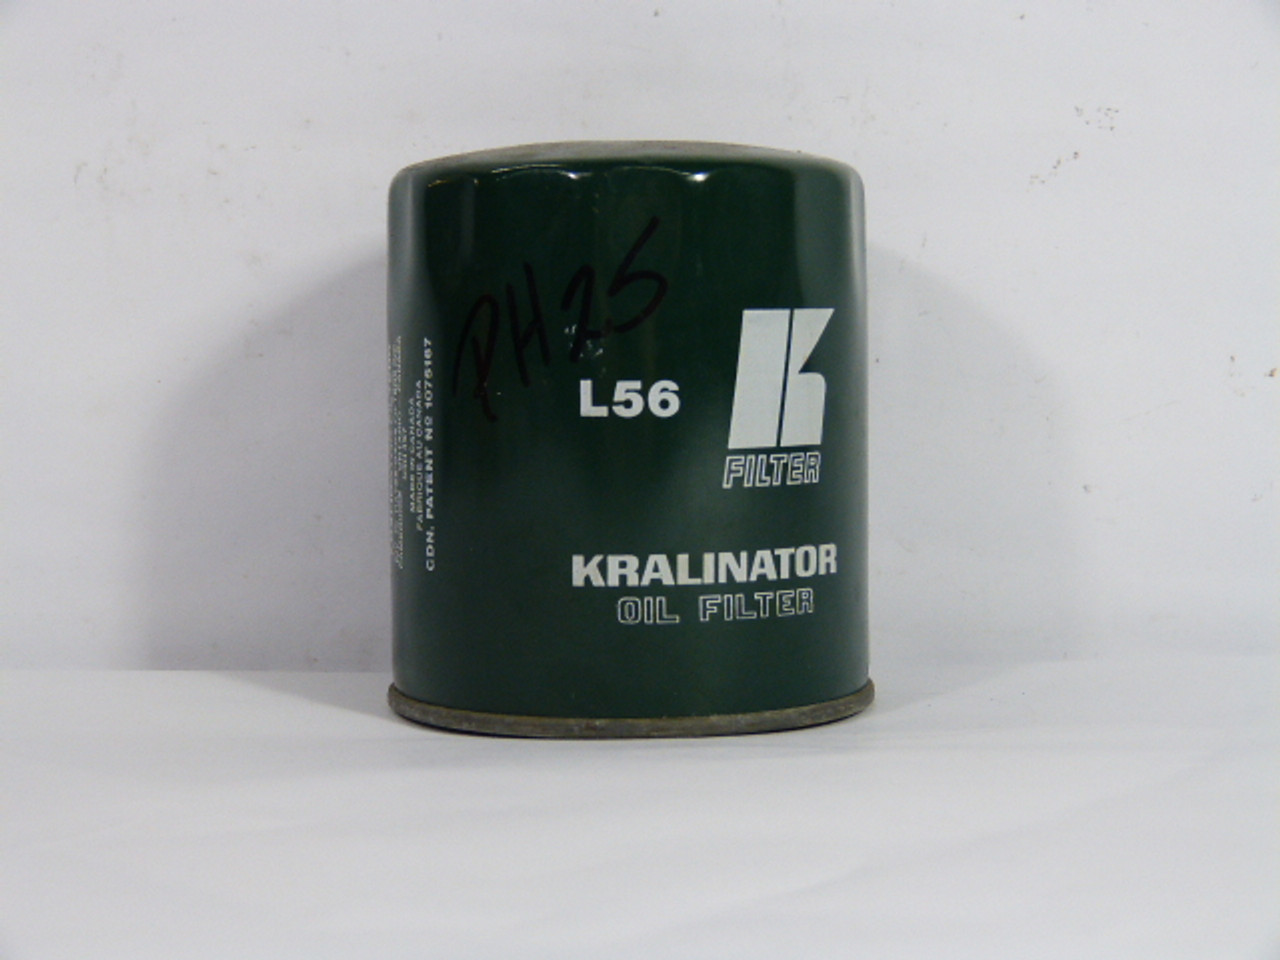 Kralinator L56 Lube Oil Filter USED